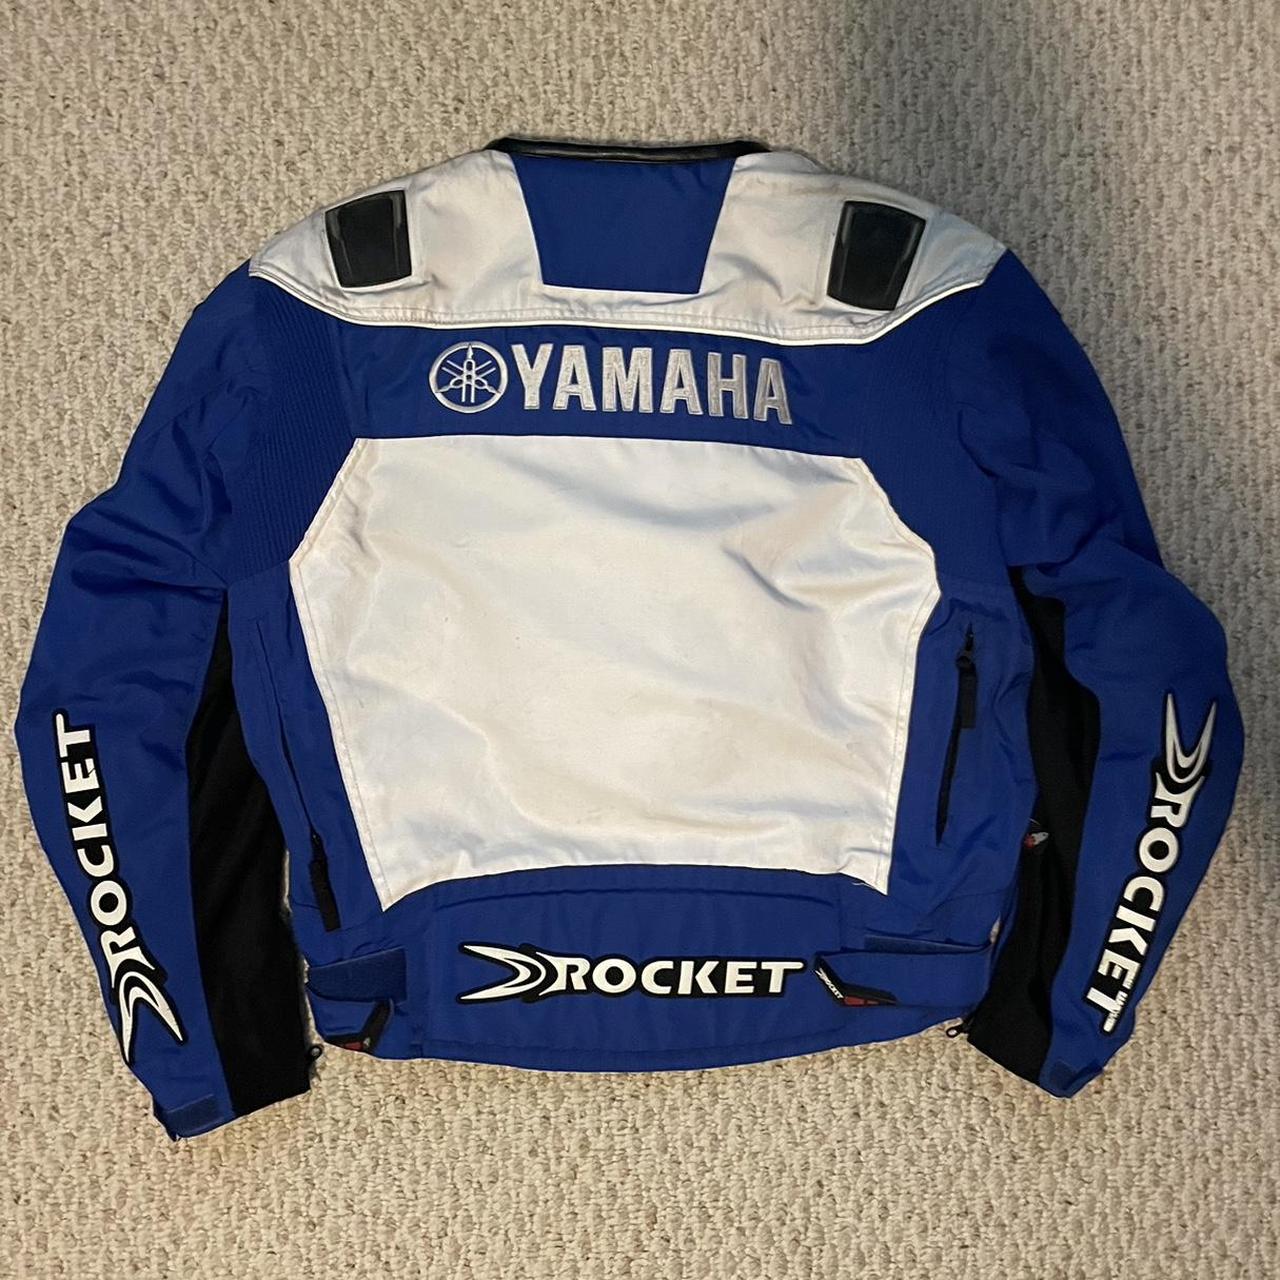 Joe rocket Yamaha racing jacket - Depop